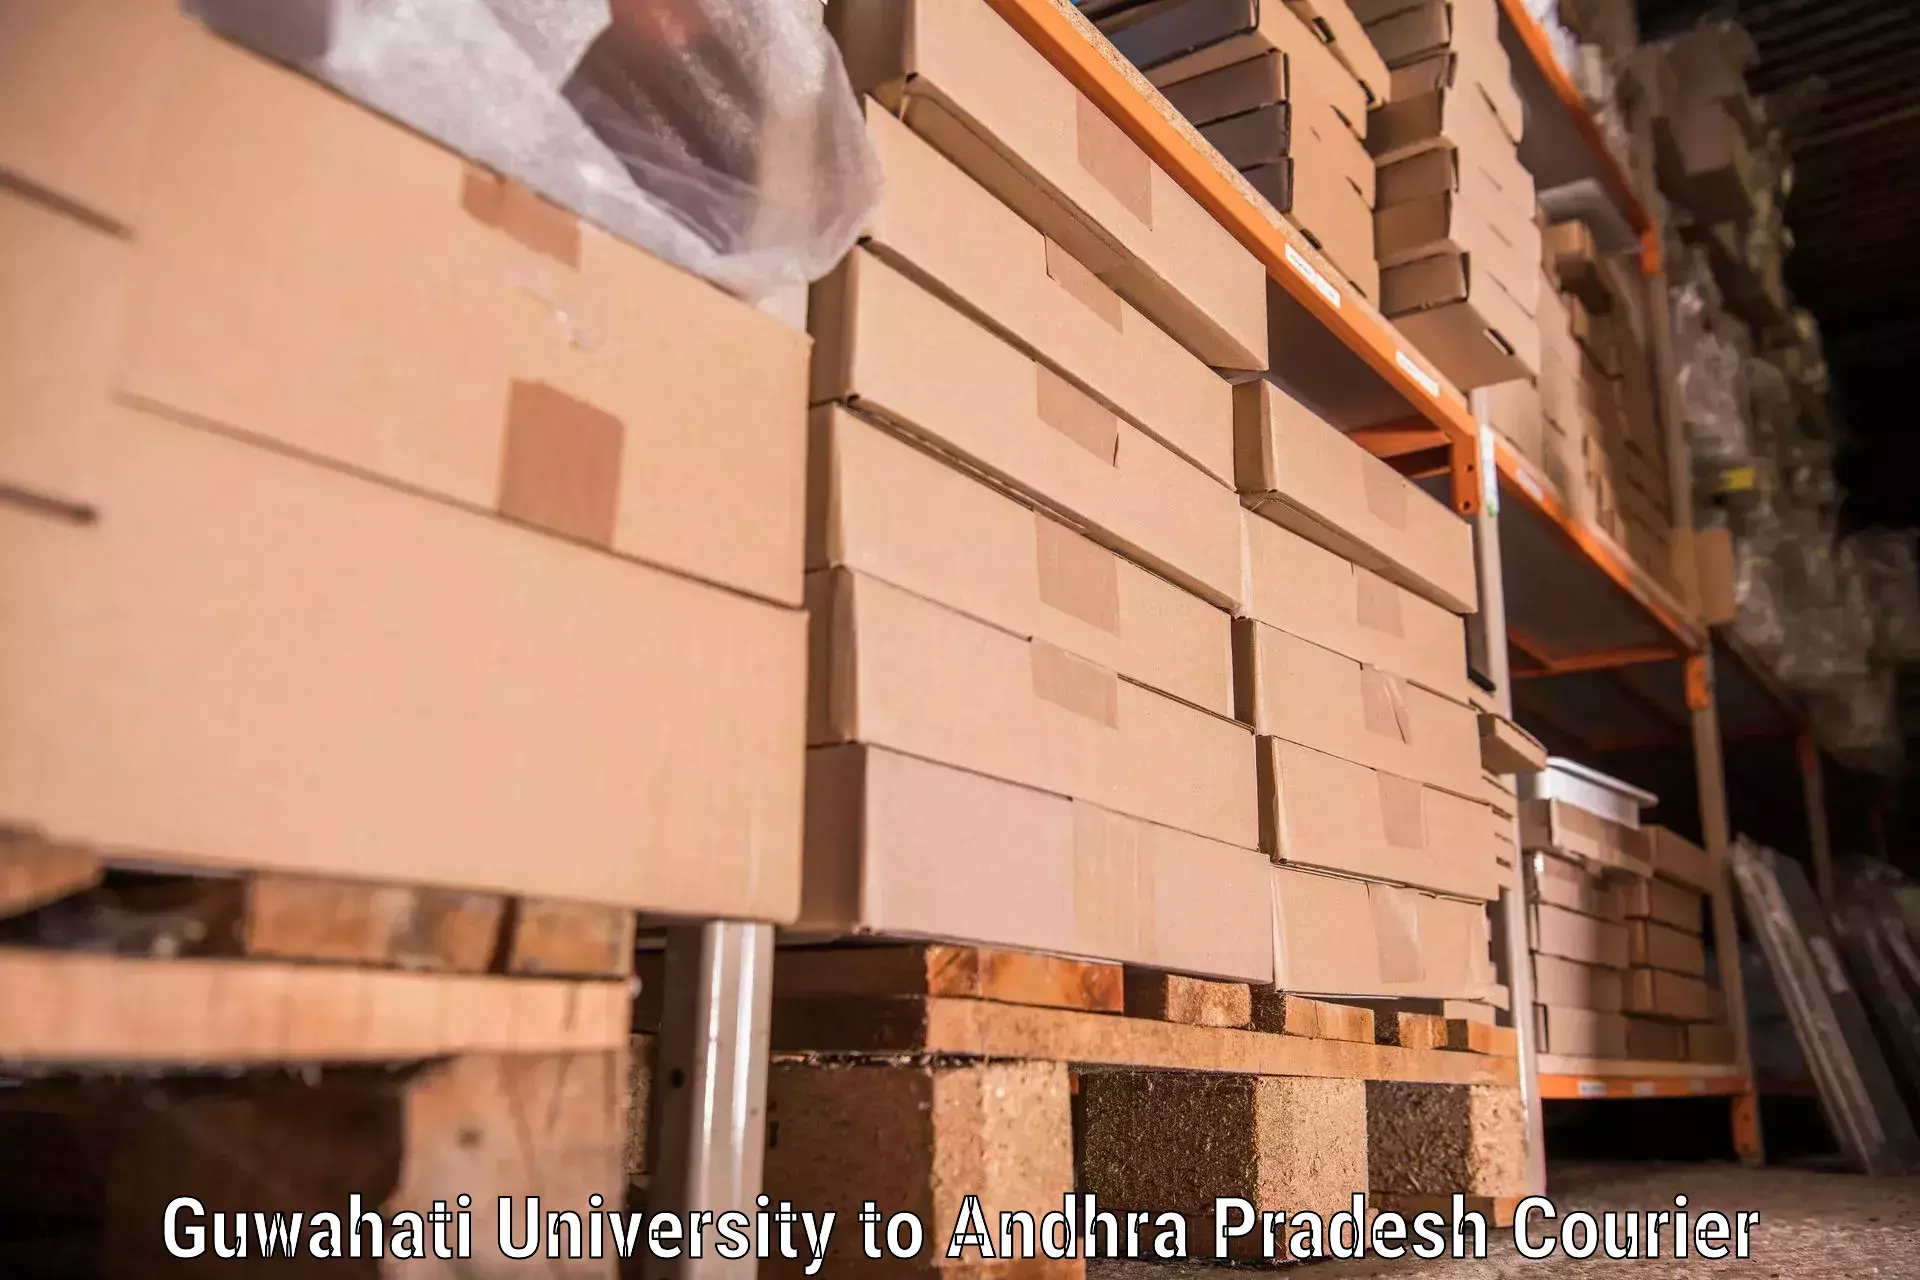 Furniture relocation experts in Guwahati University to Tirupati